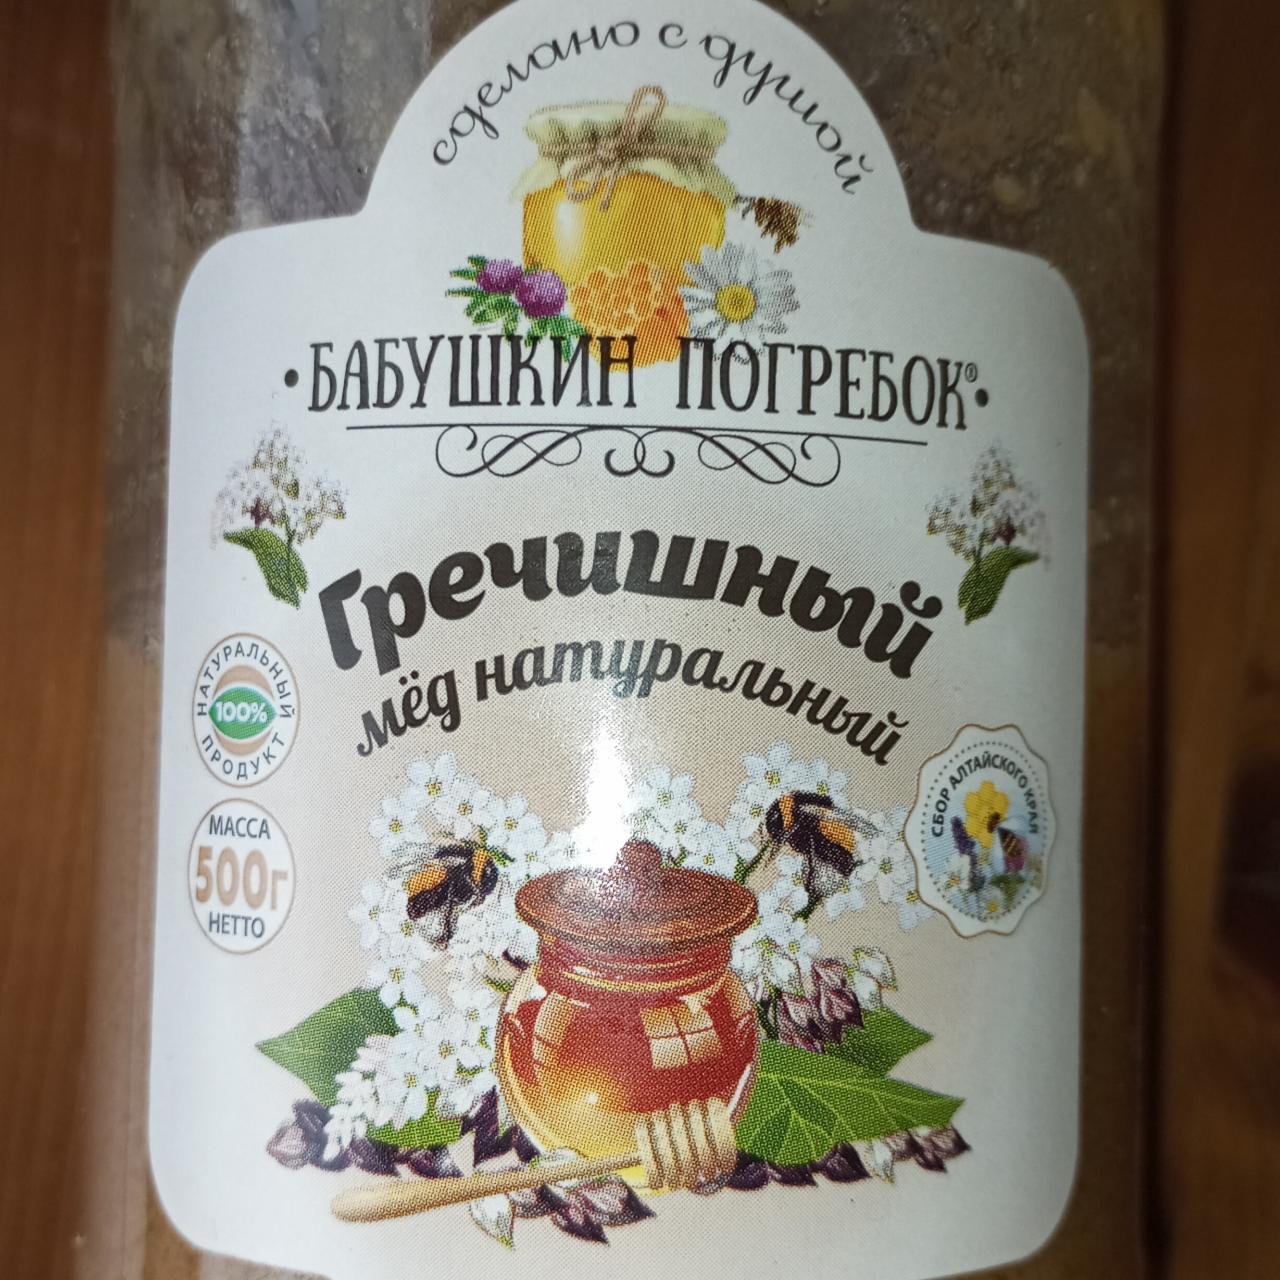 Фото - гречишный мёд натуральный Бабушкин погребок